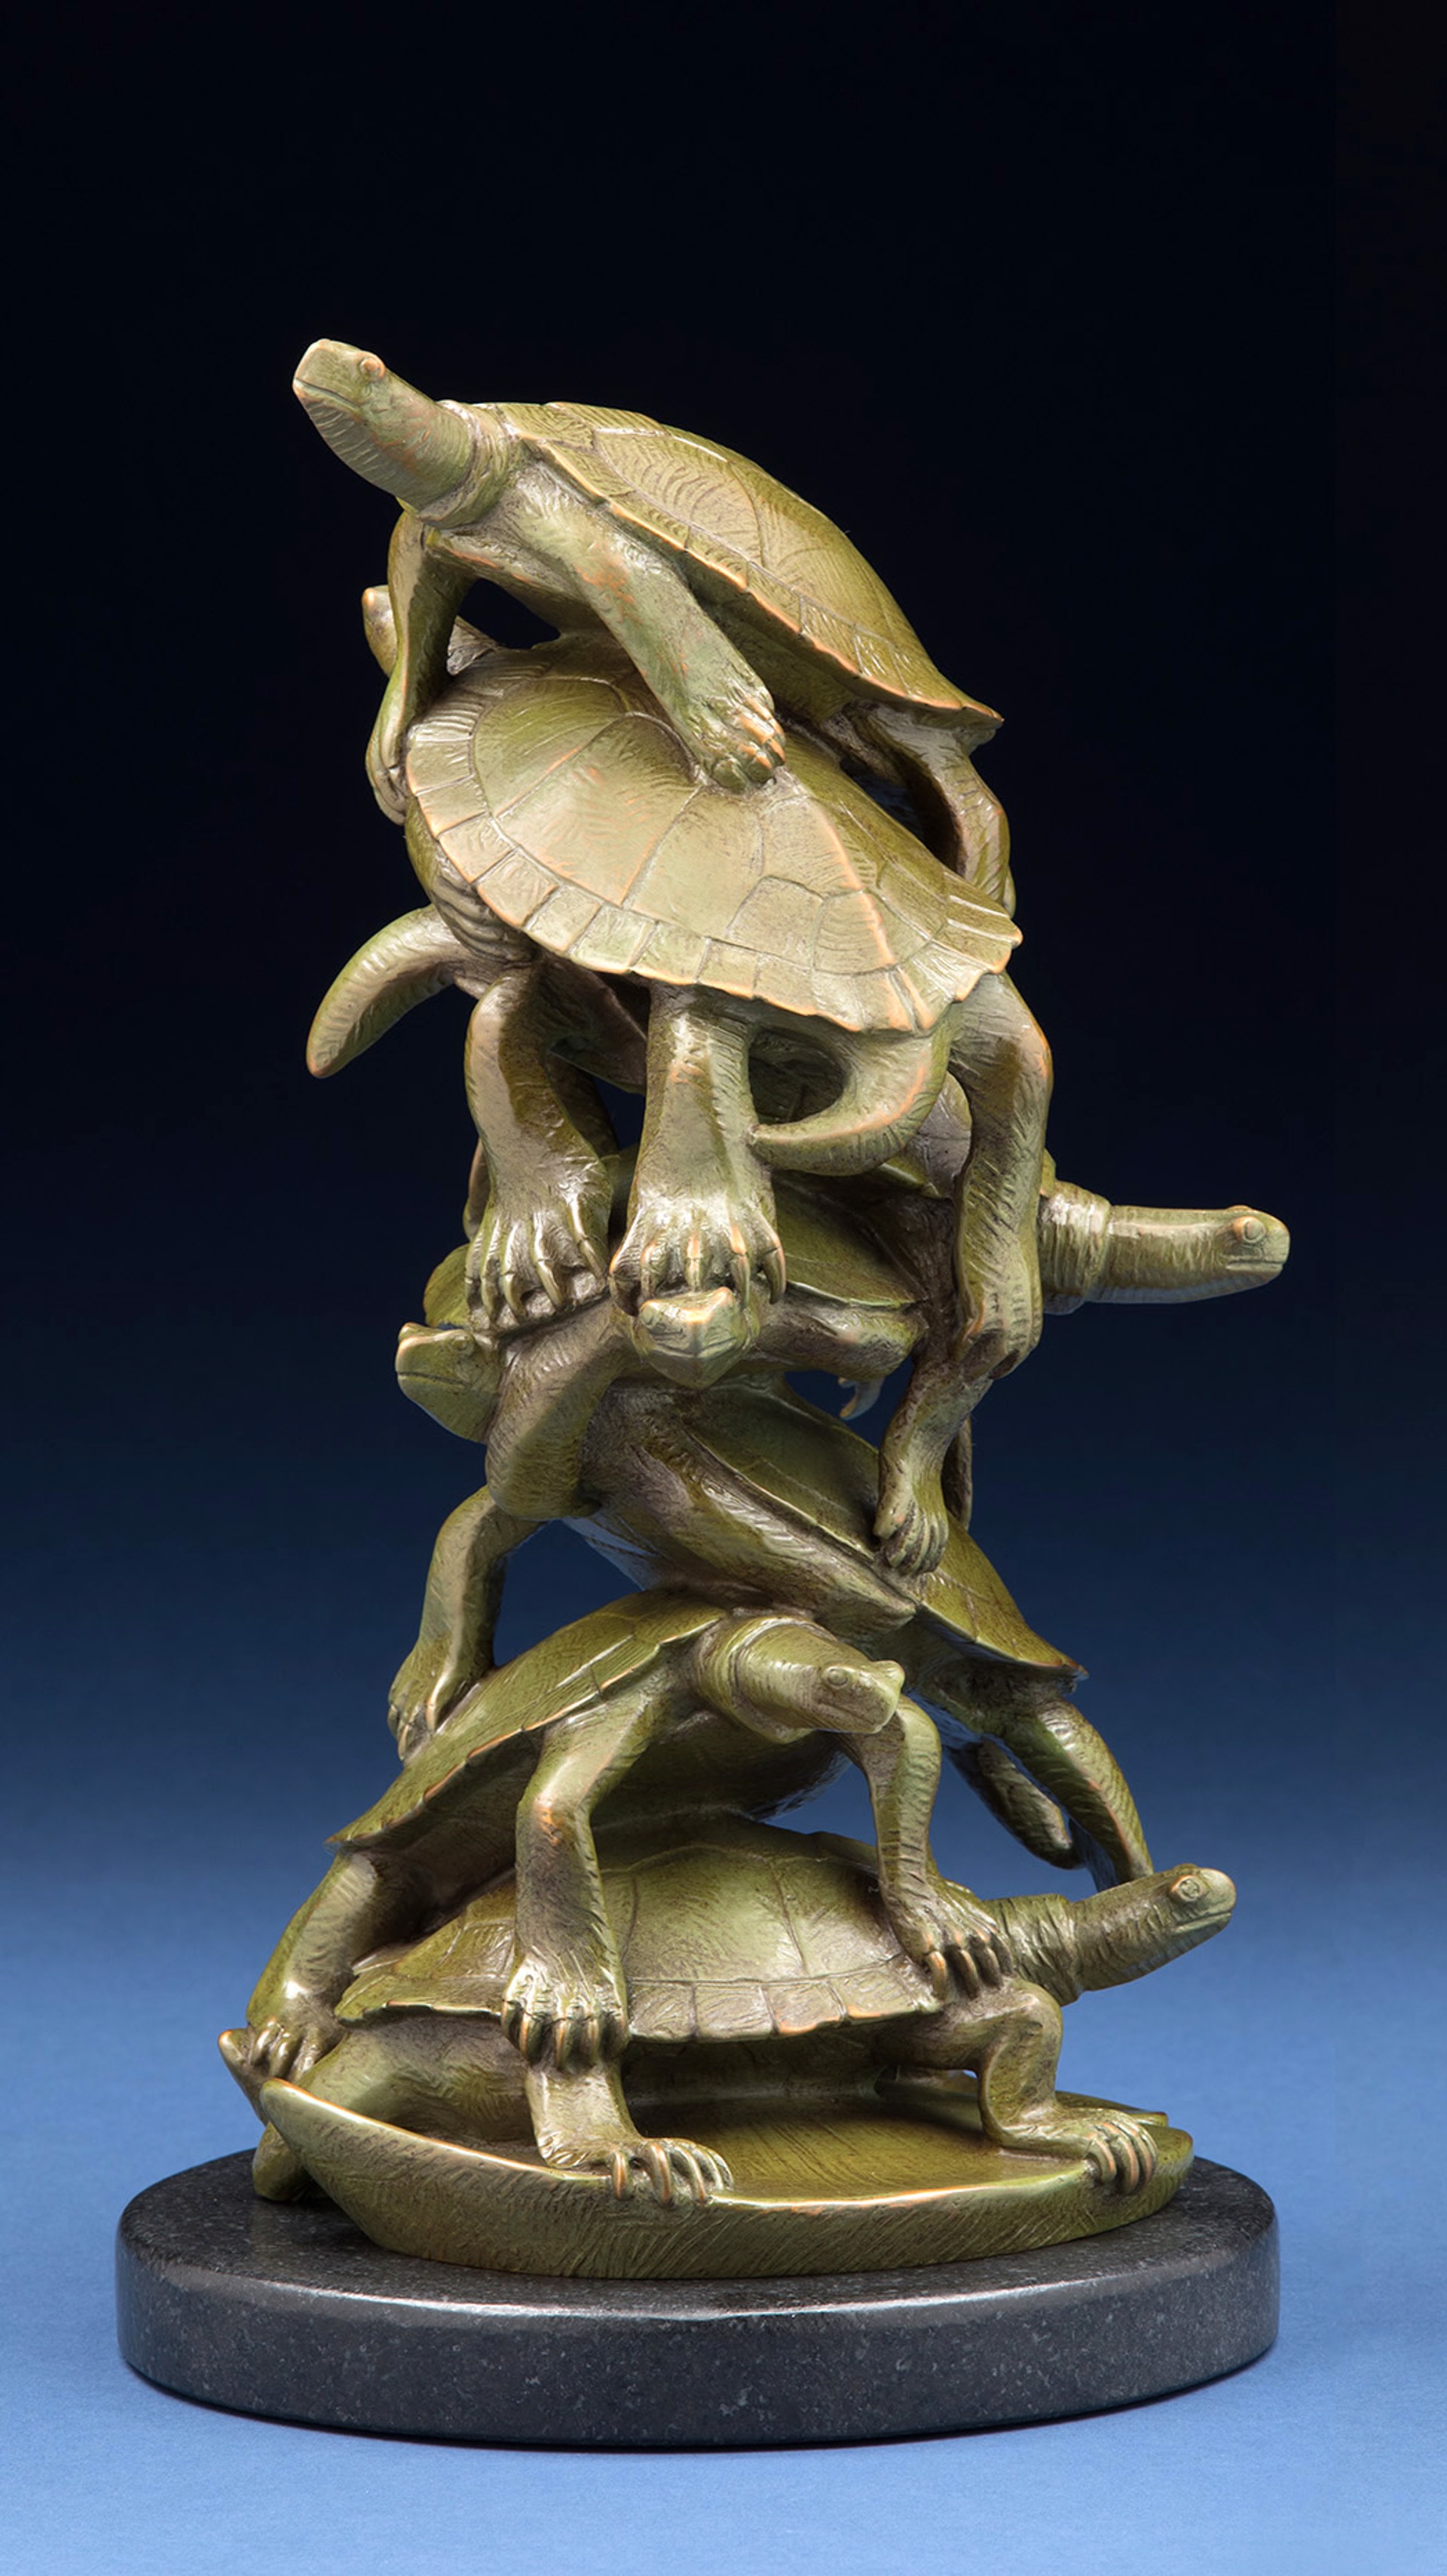 Stacked Turtles by Tony Hochstetler